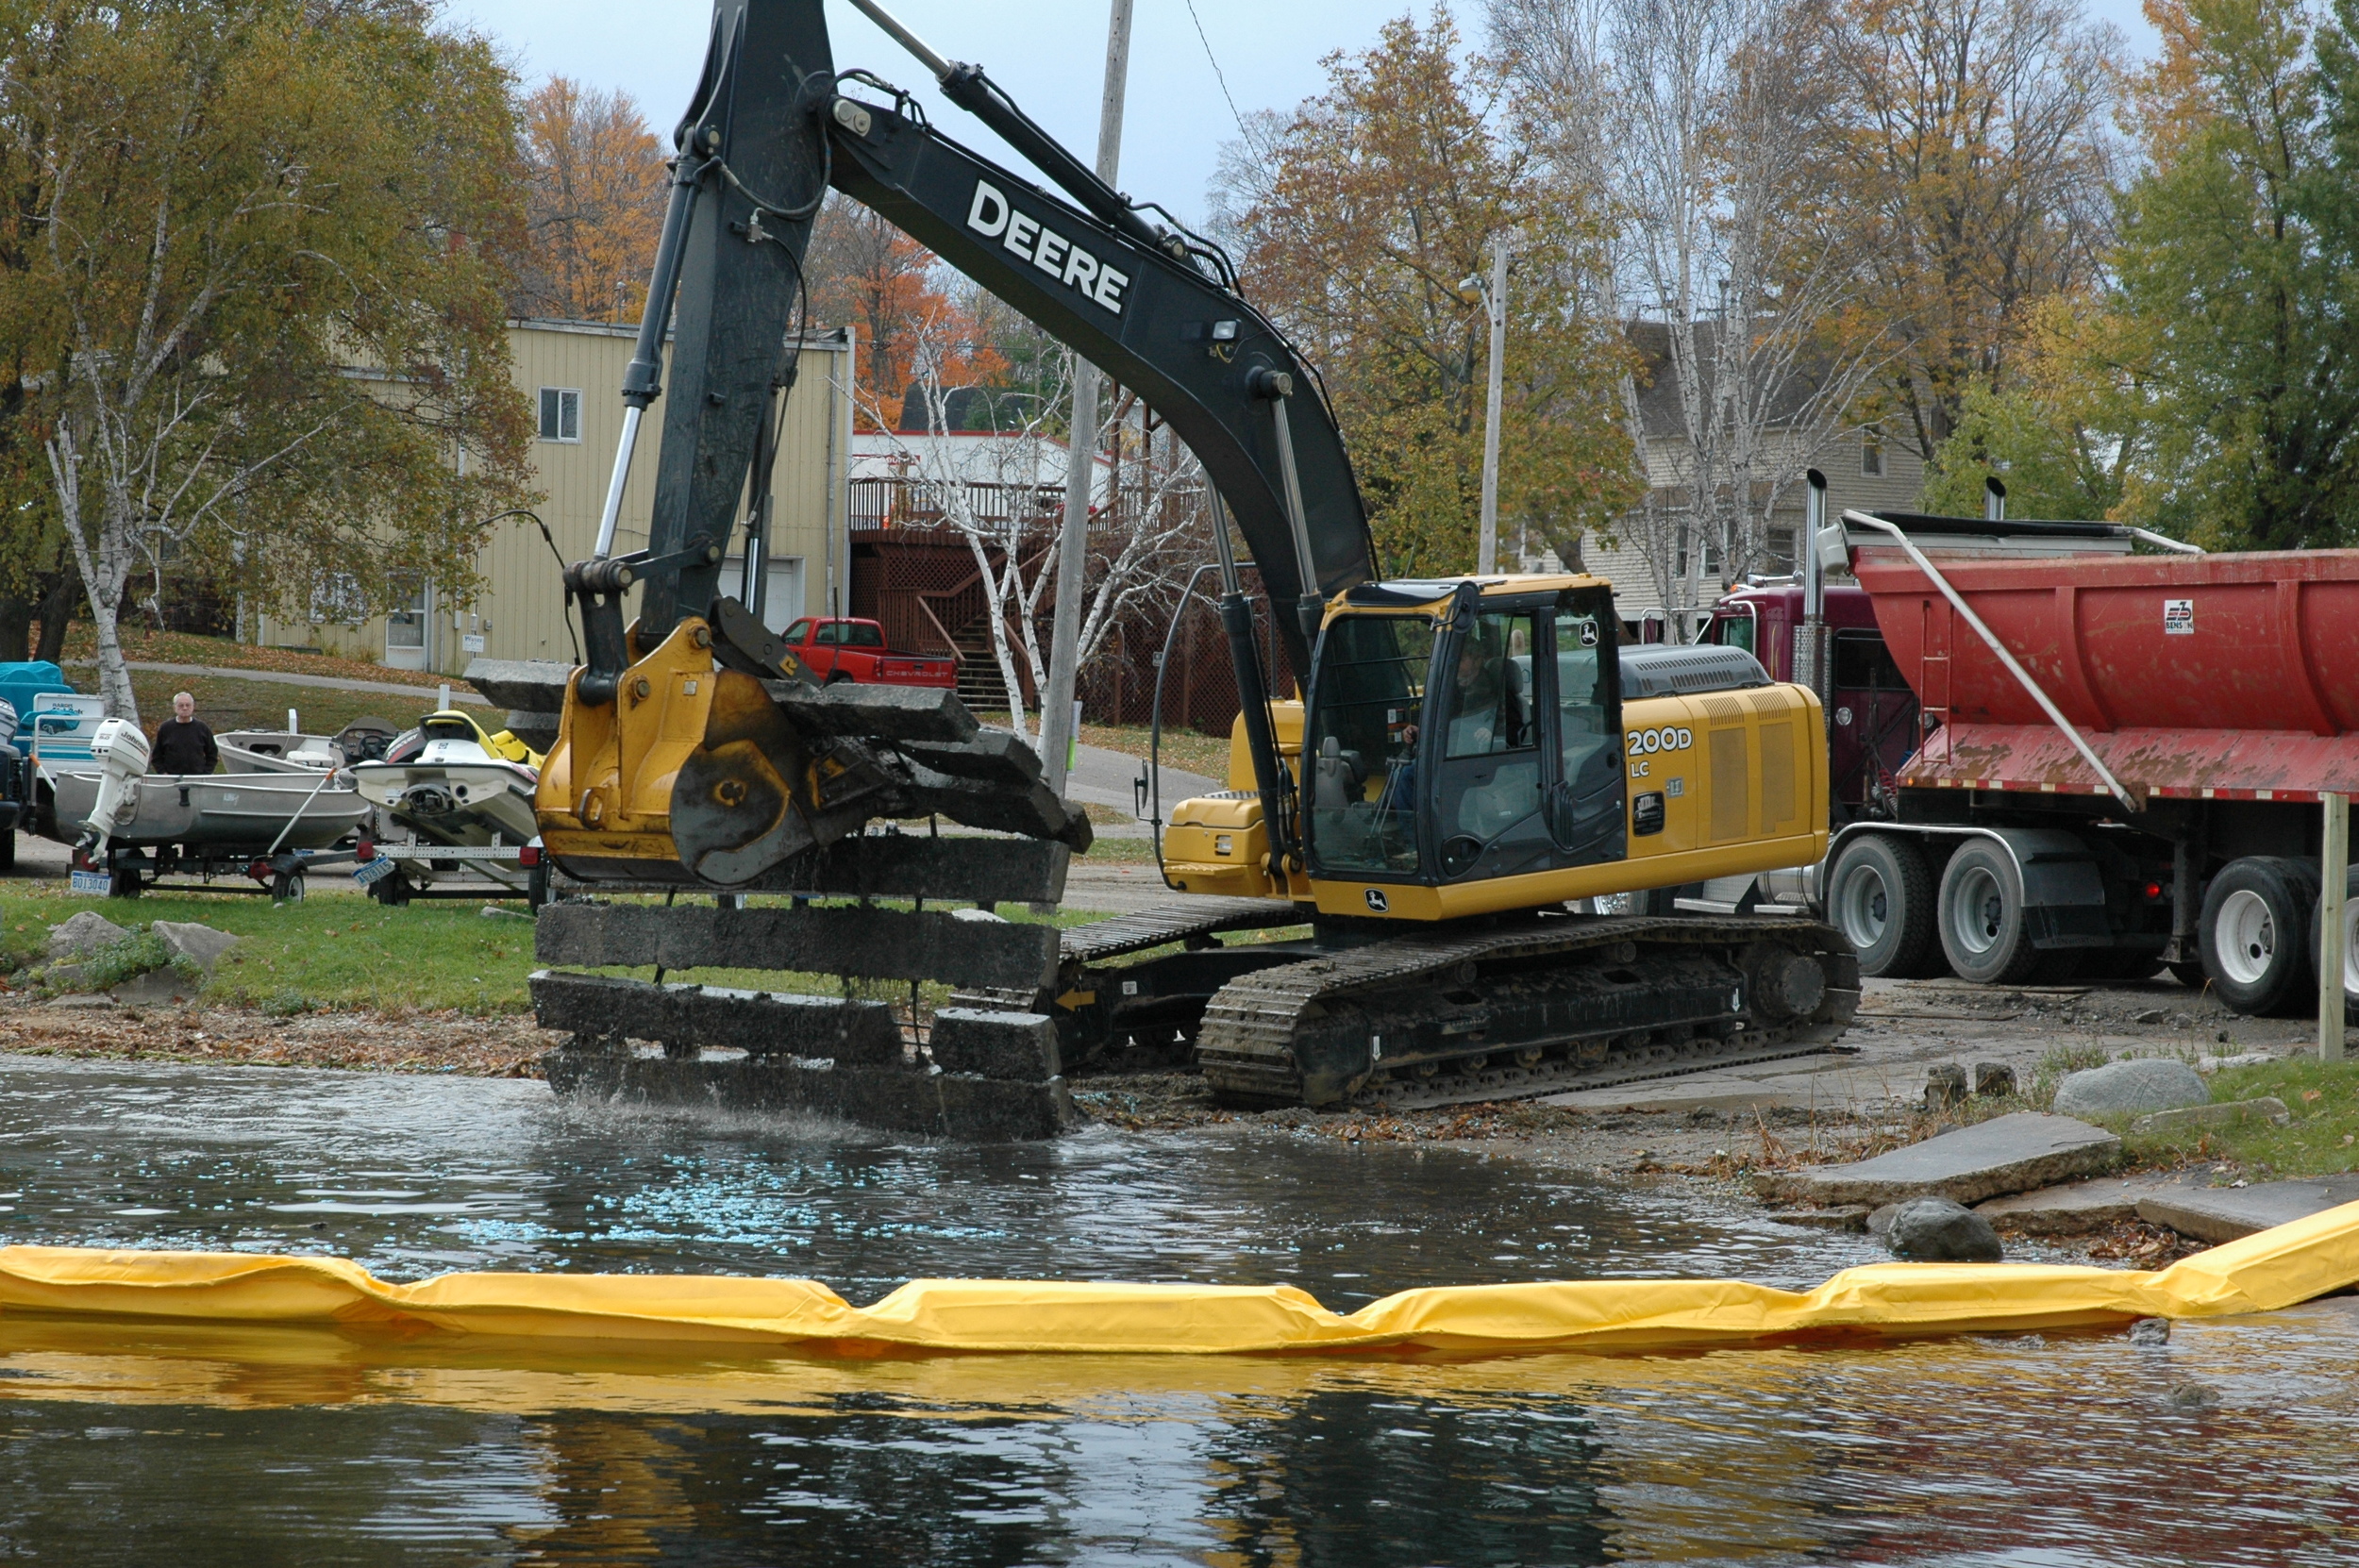  Bear Lake Boat Launch Improvements, photo 1 